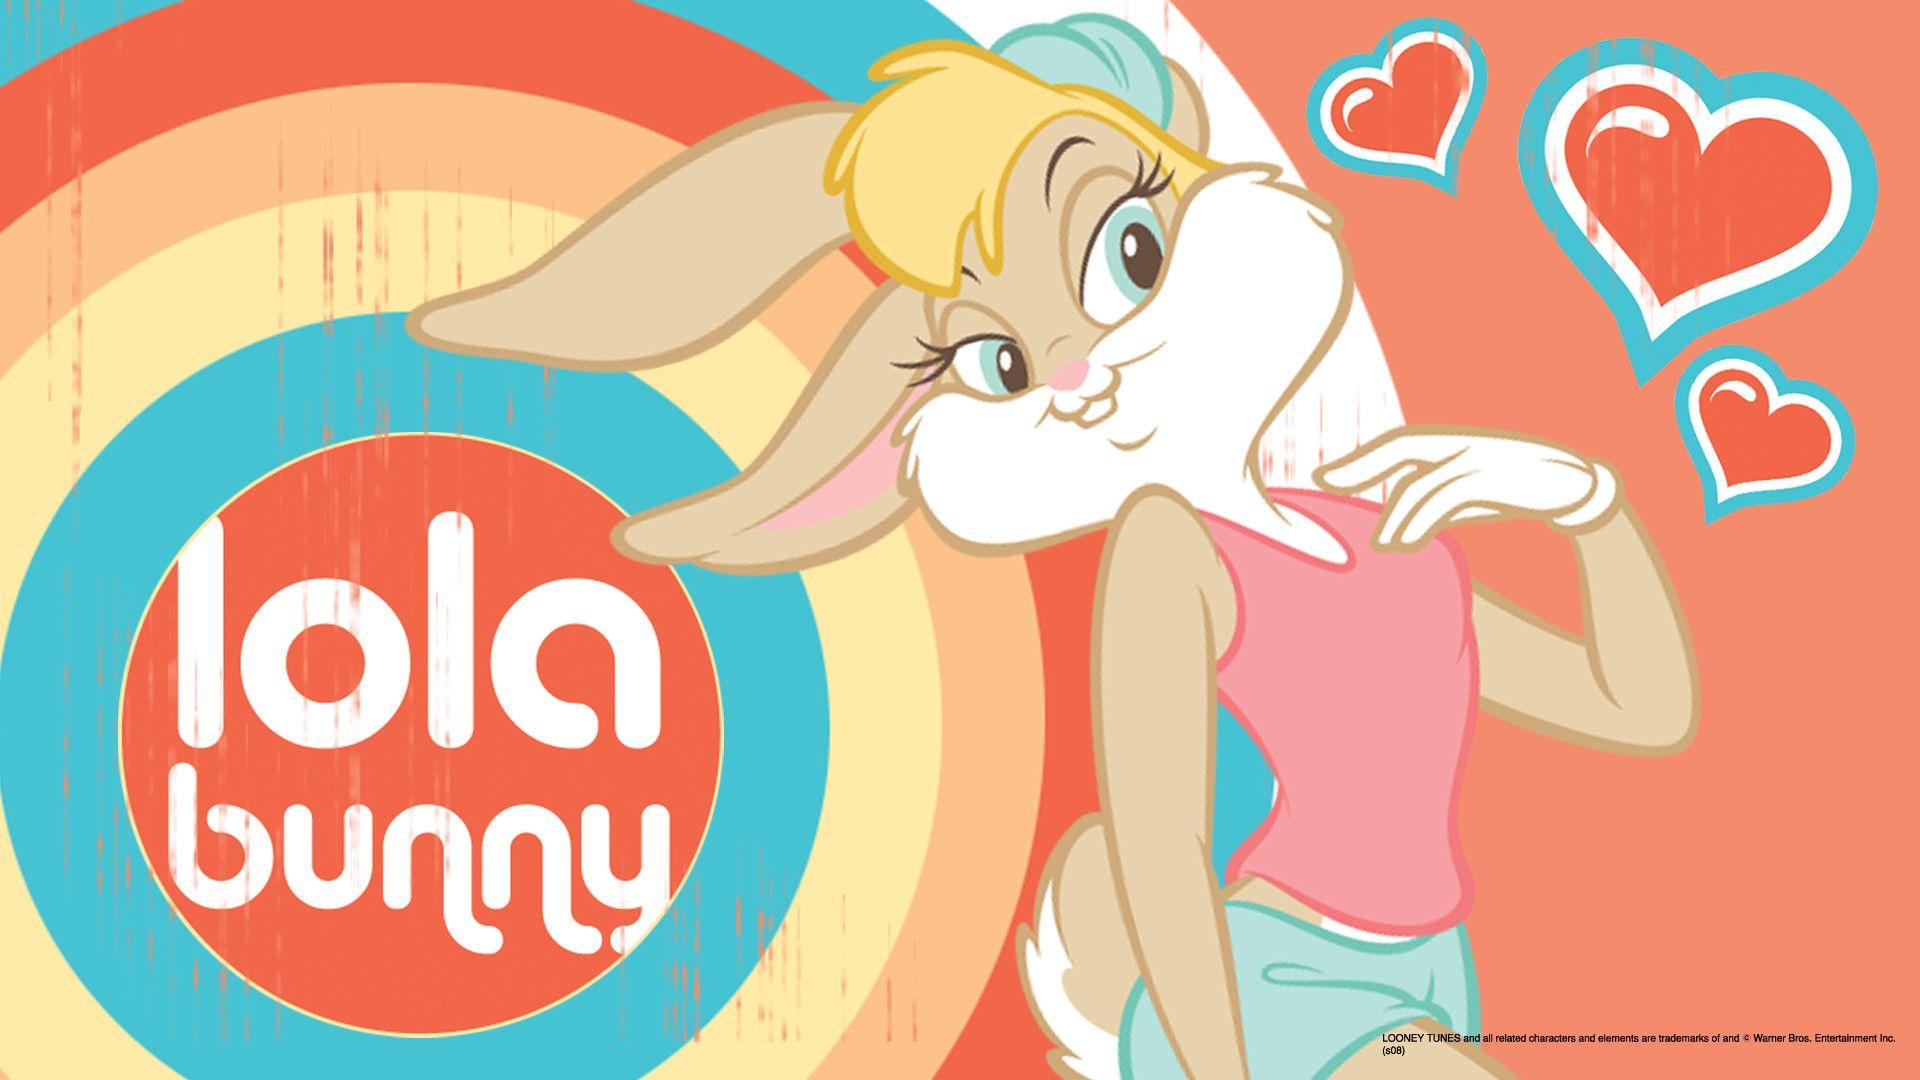 Lola bunny wallpaper.